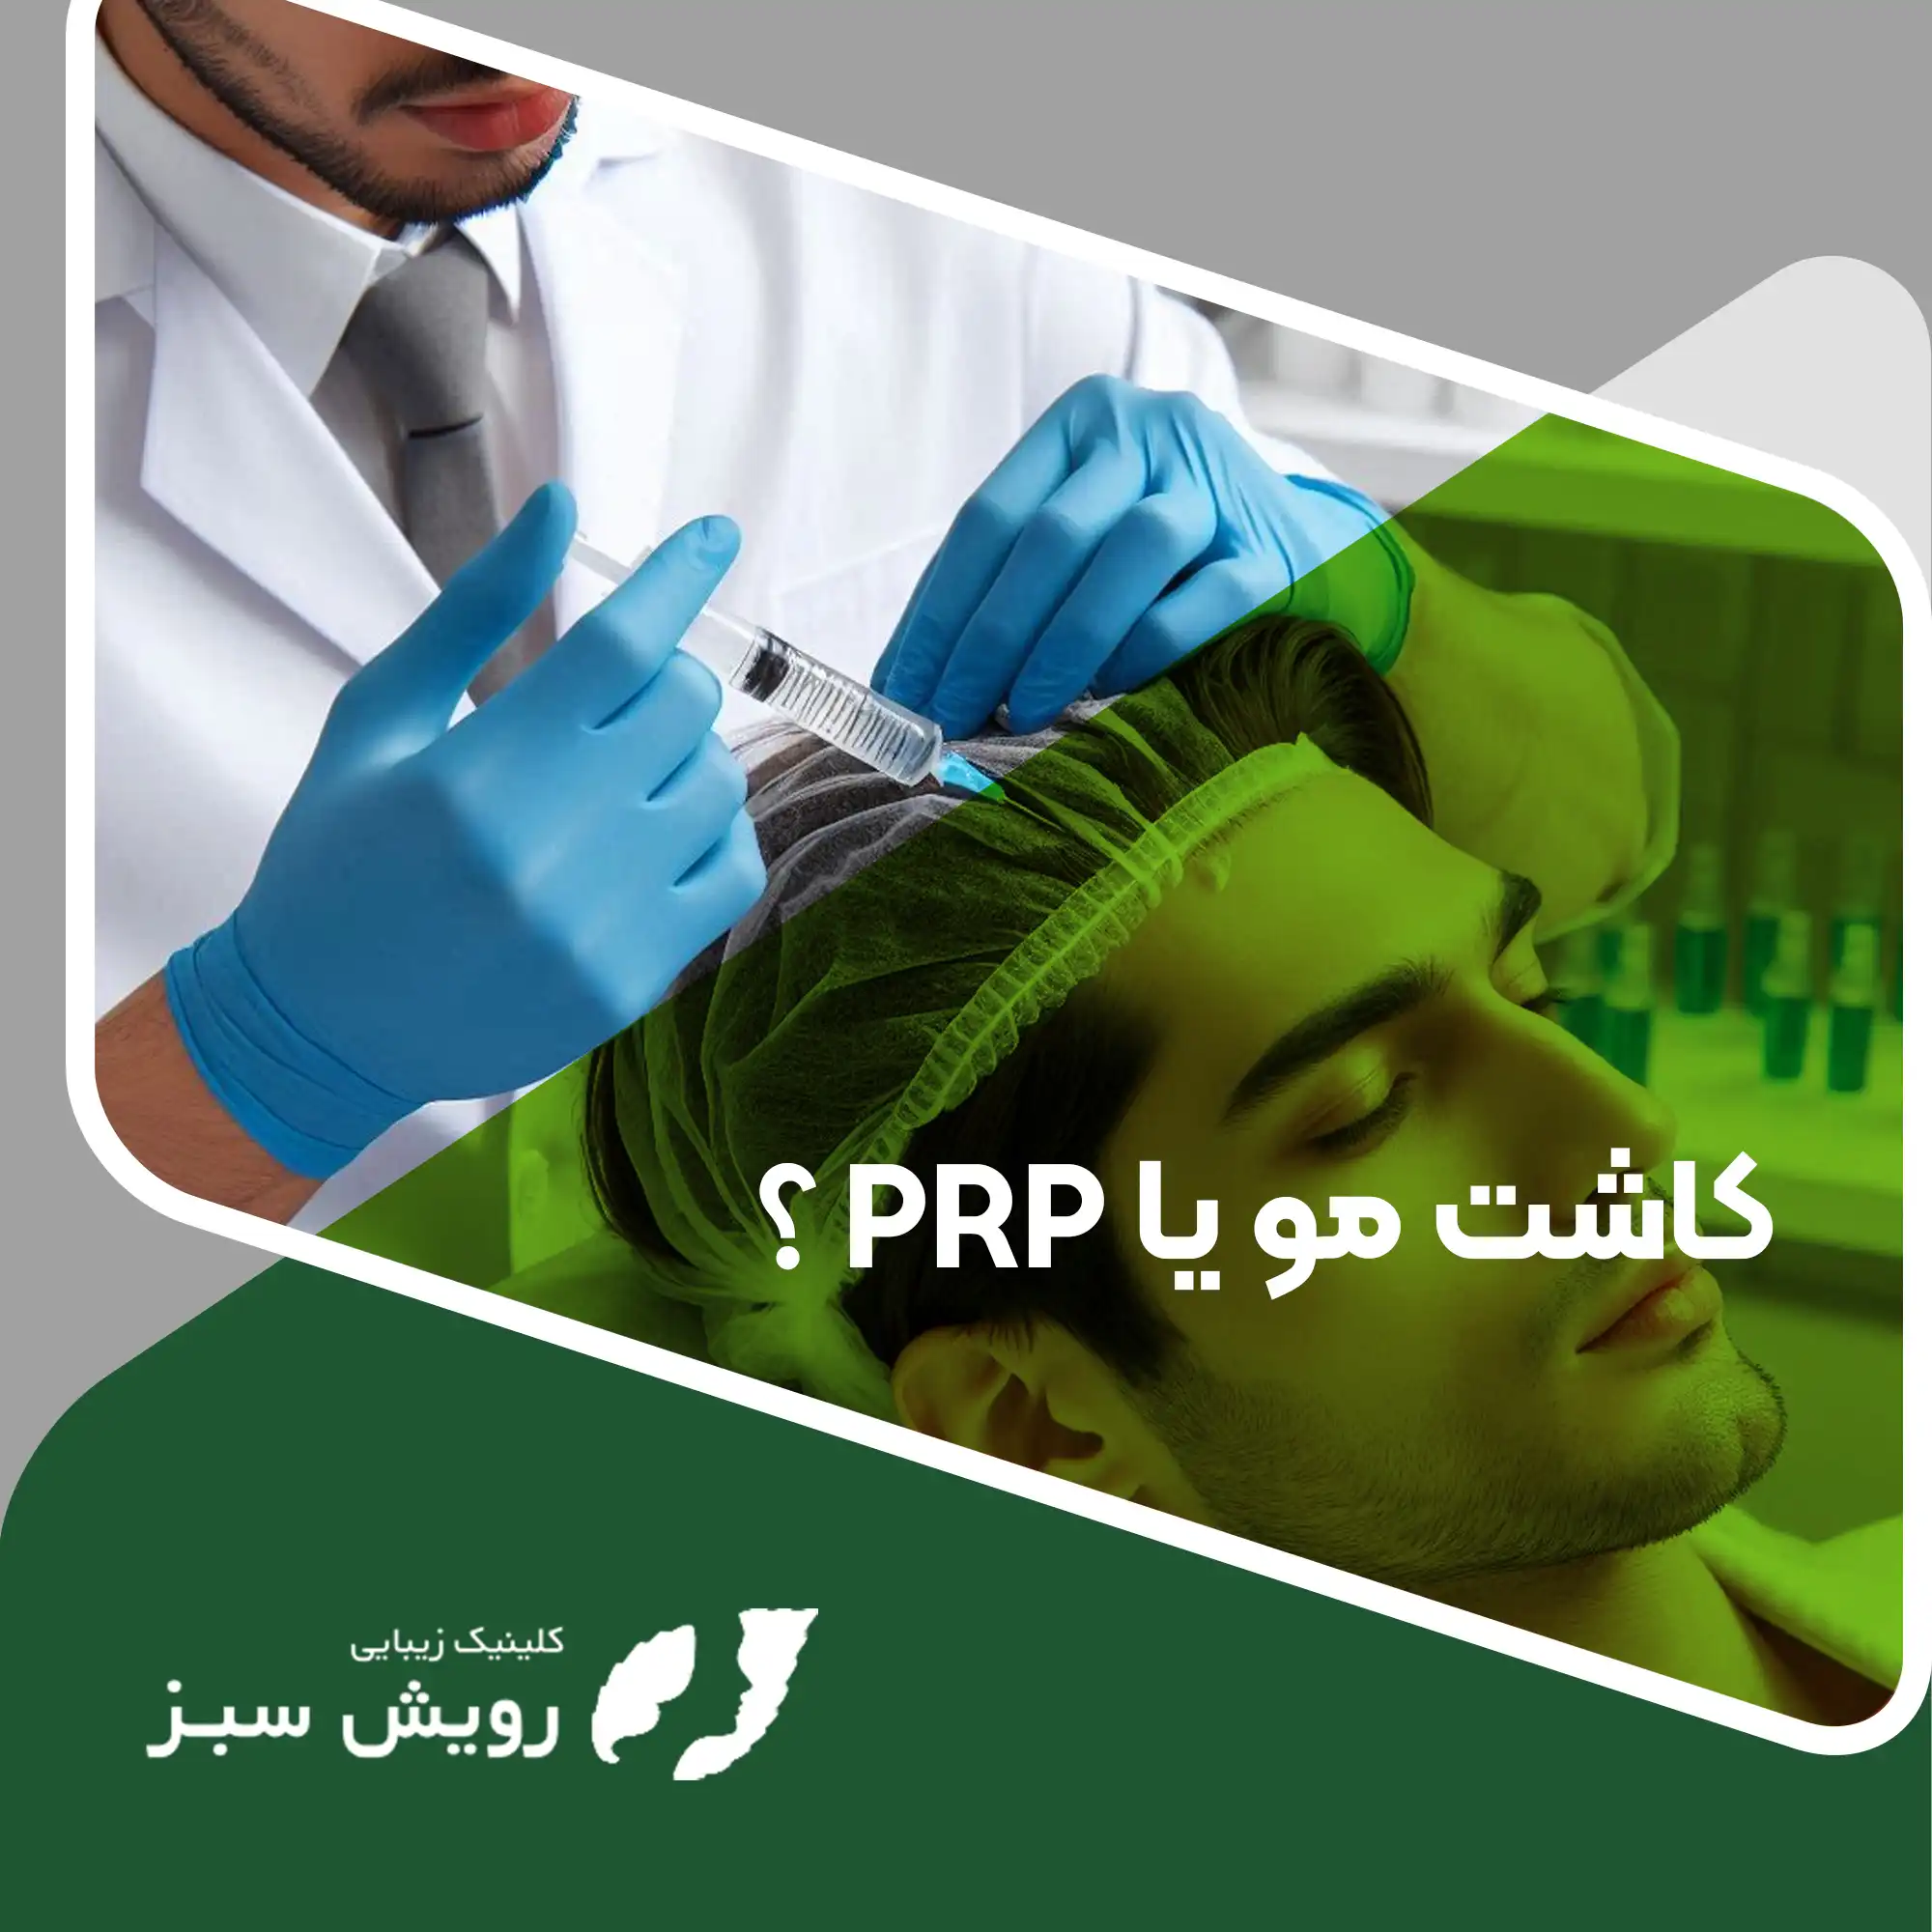 You are currently viewing کاشت مو بهتر است یا PRP؟ کدام روش برای درمان طاسی مناسب است؟